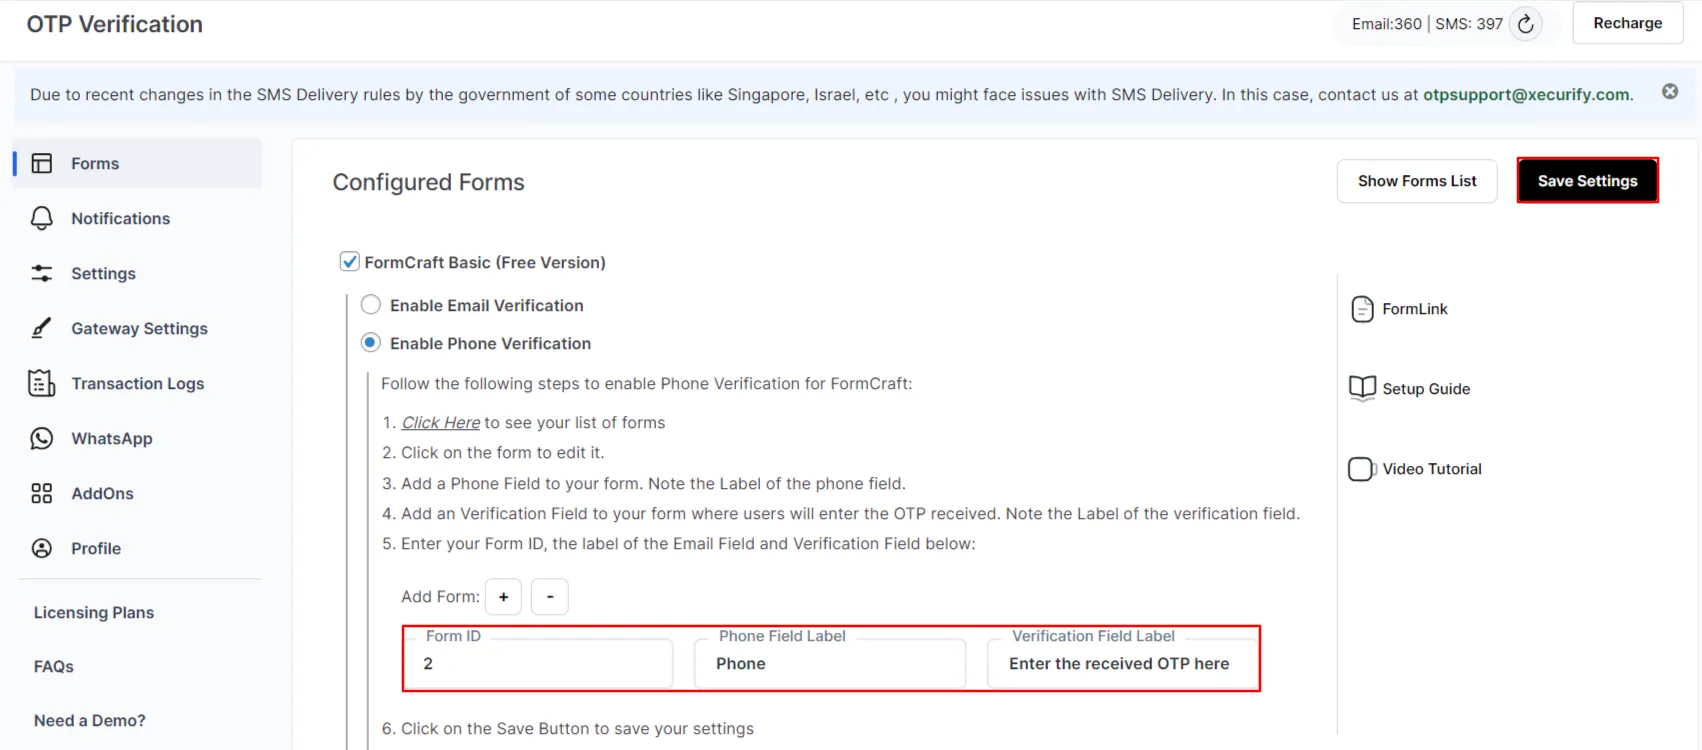 Free otp verification formcraft basic - Save settings button